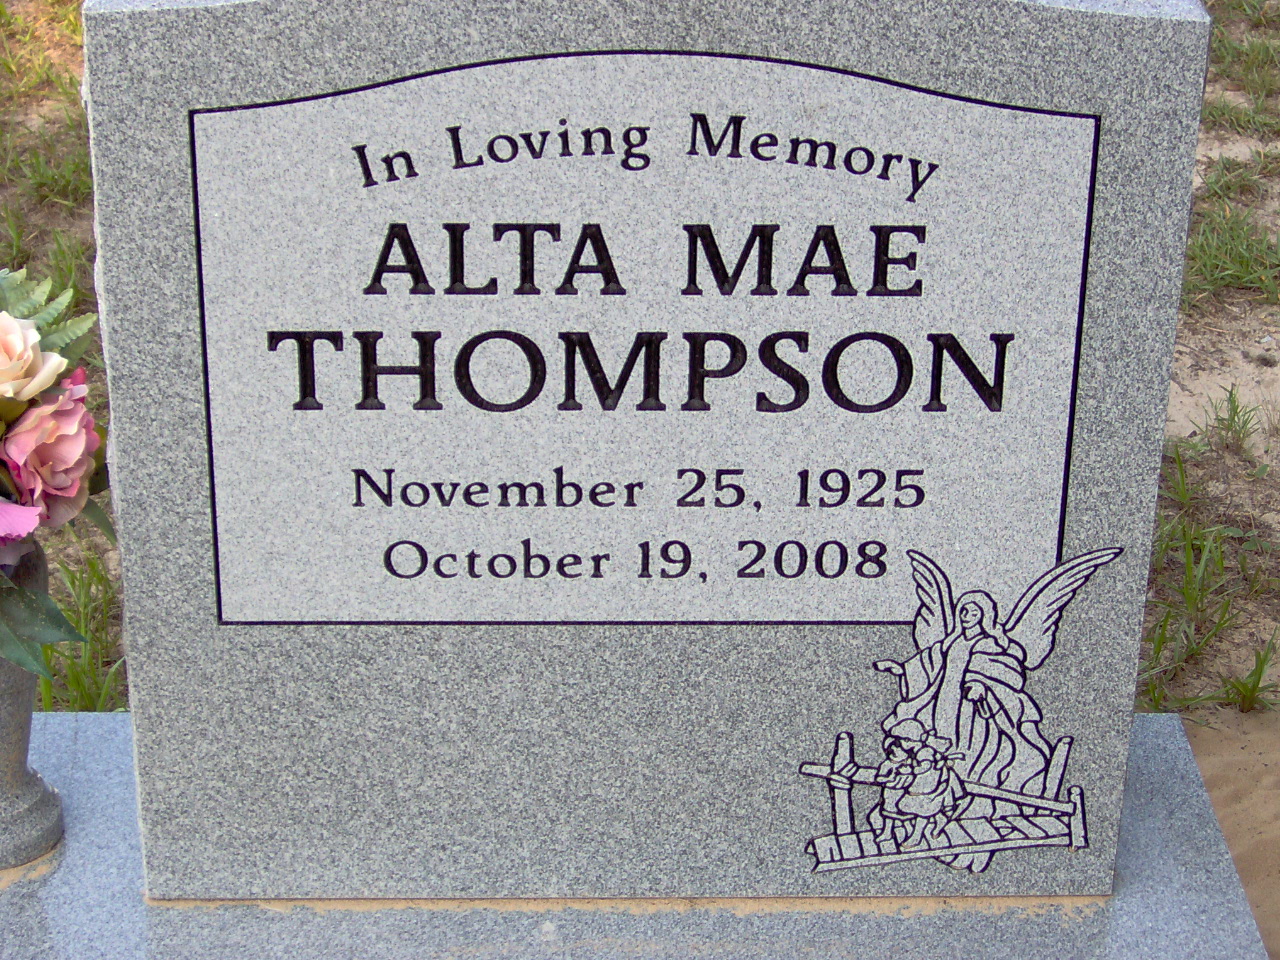 Headstone for Thompson, Alta Mae